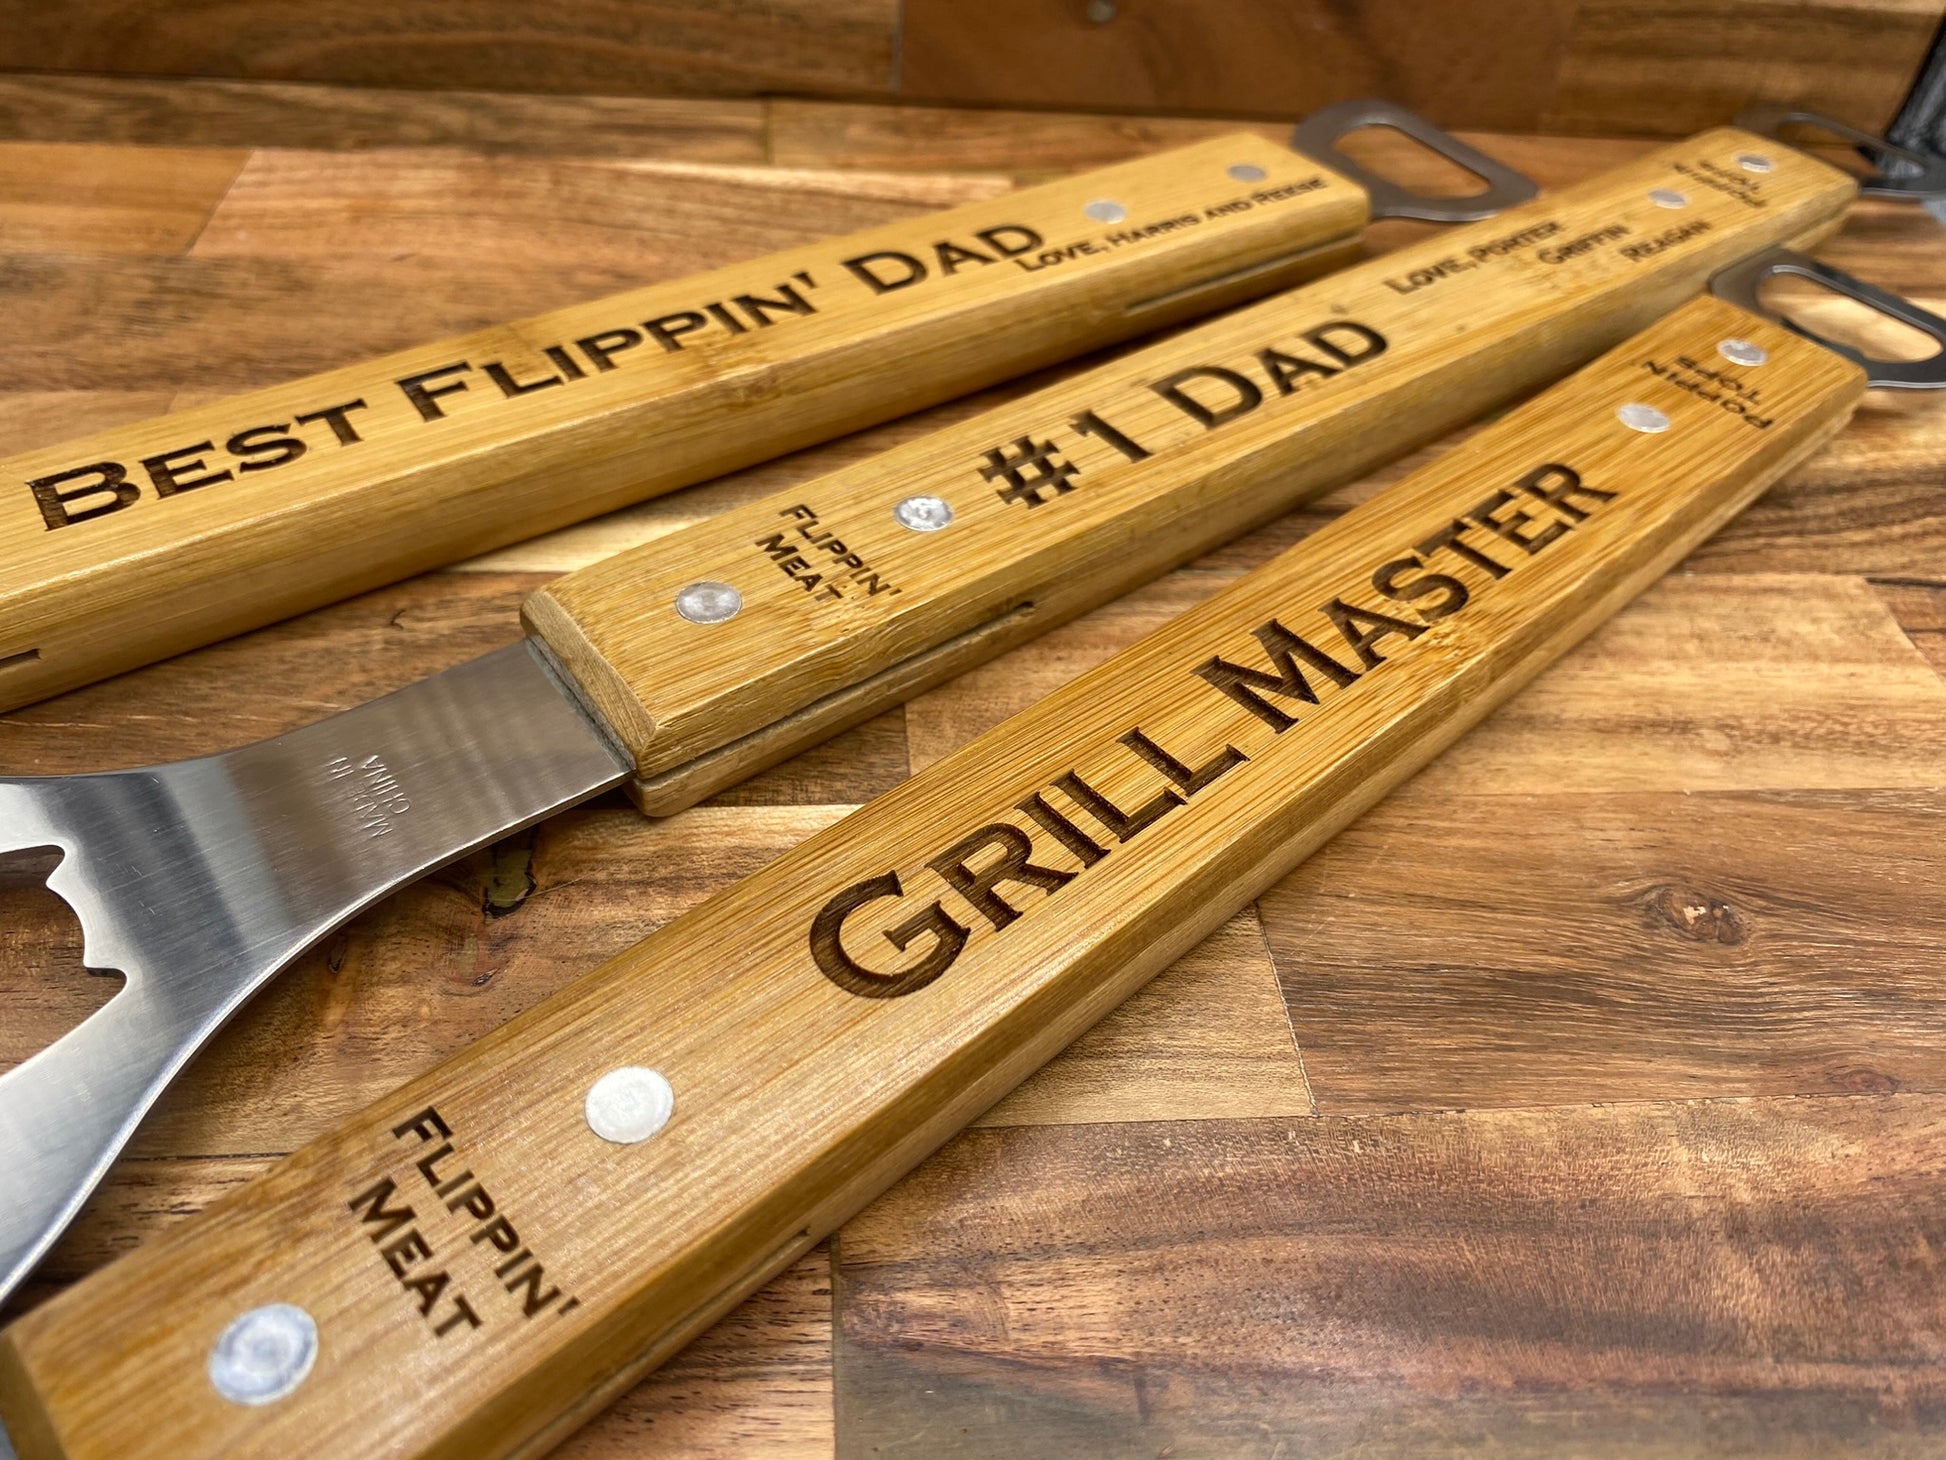 Best Flippin' Dad Grilling Spatula + Tools - Baum Designs